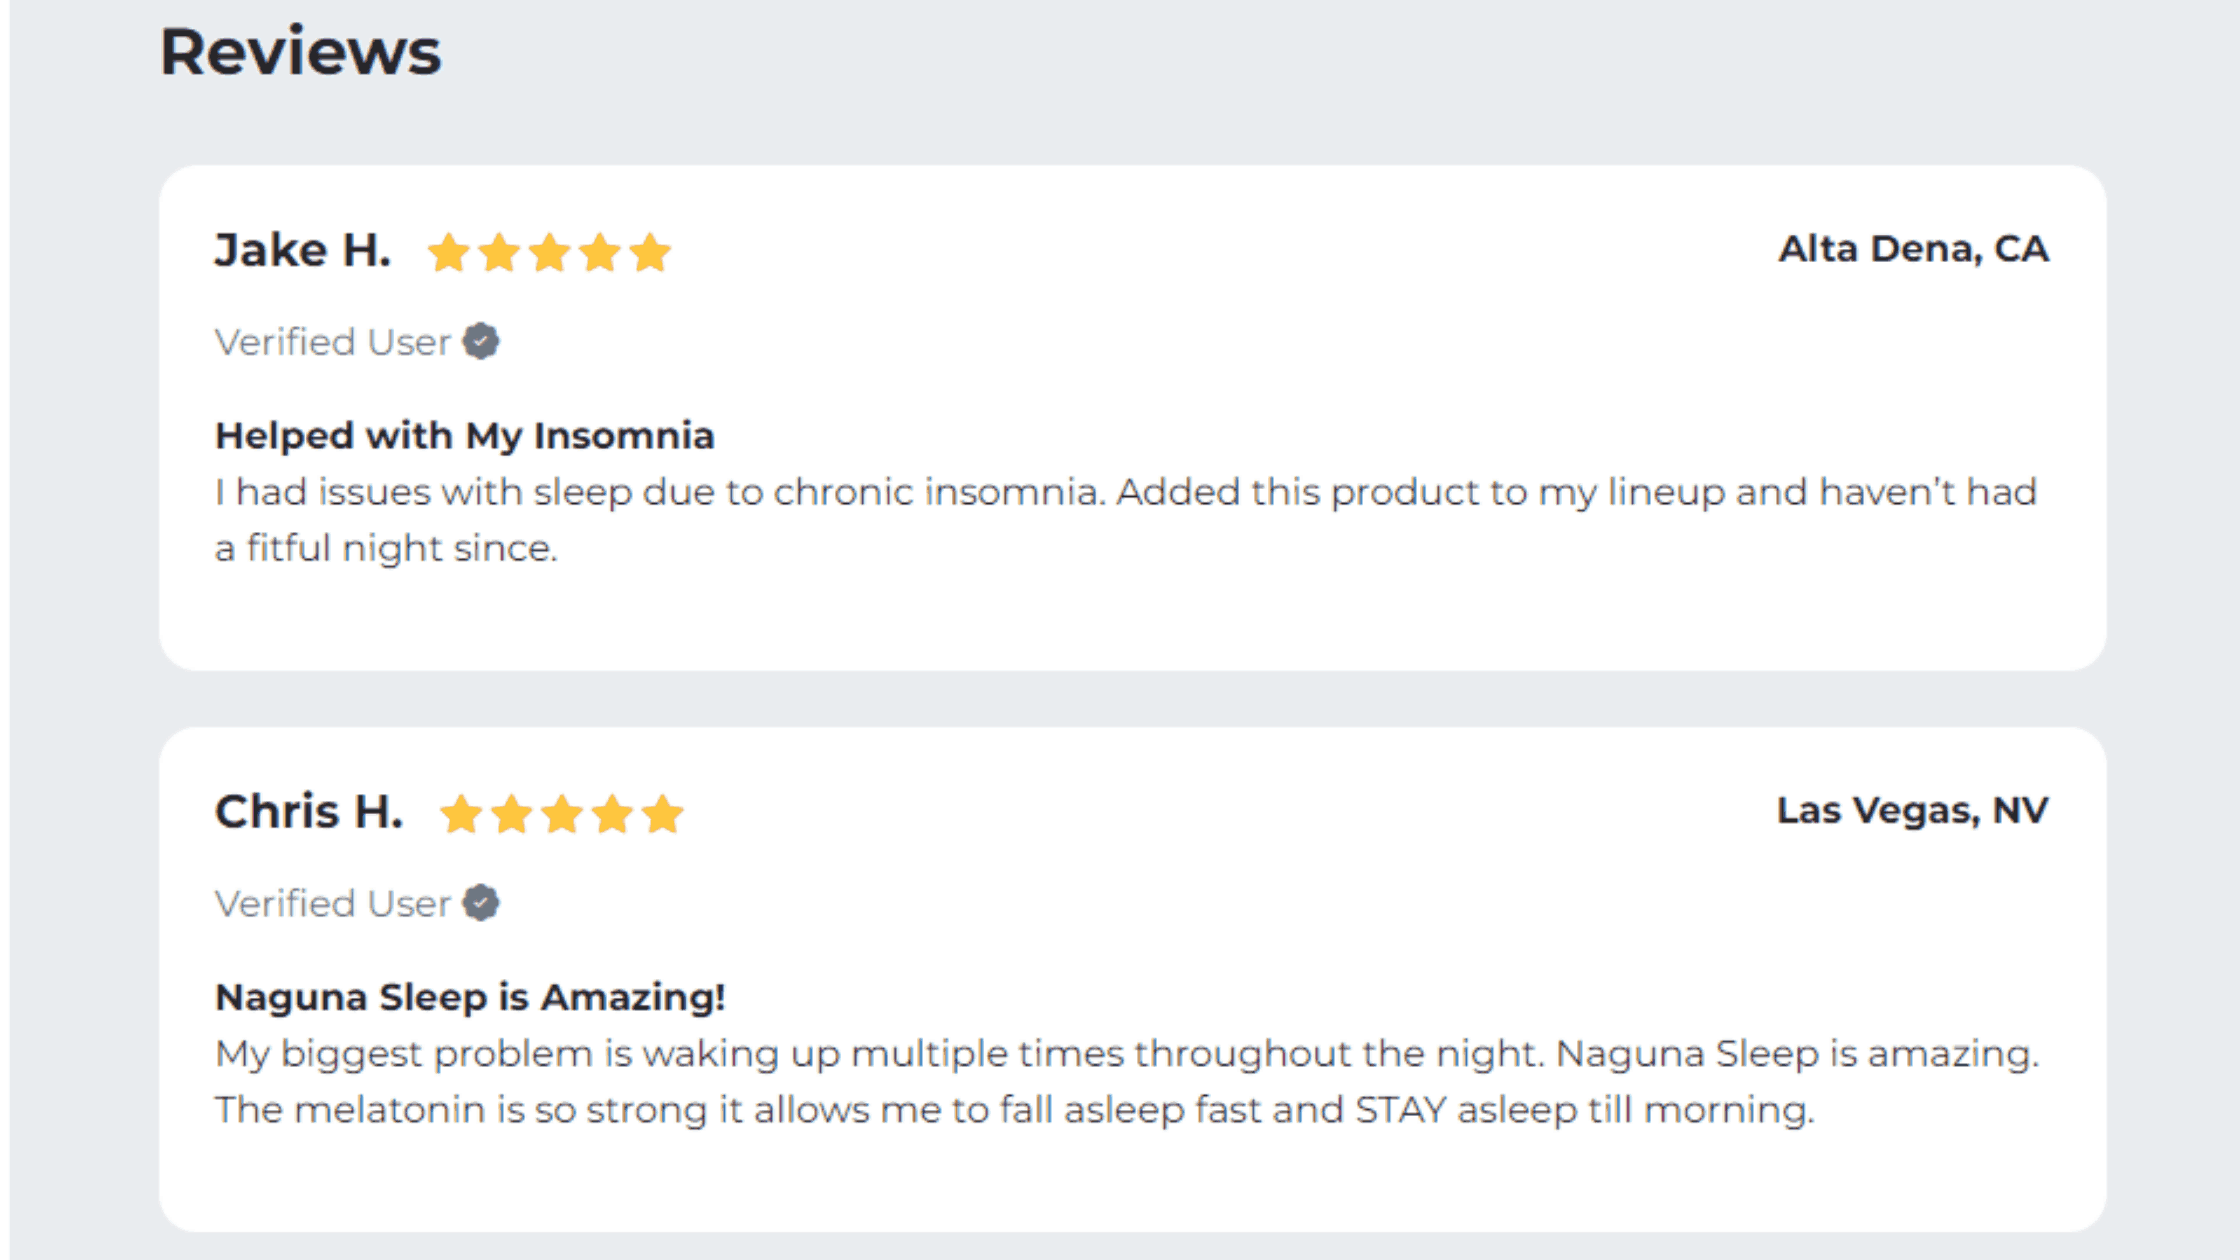 Naguna sleep customer reviews